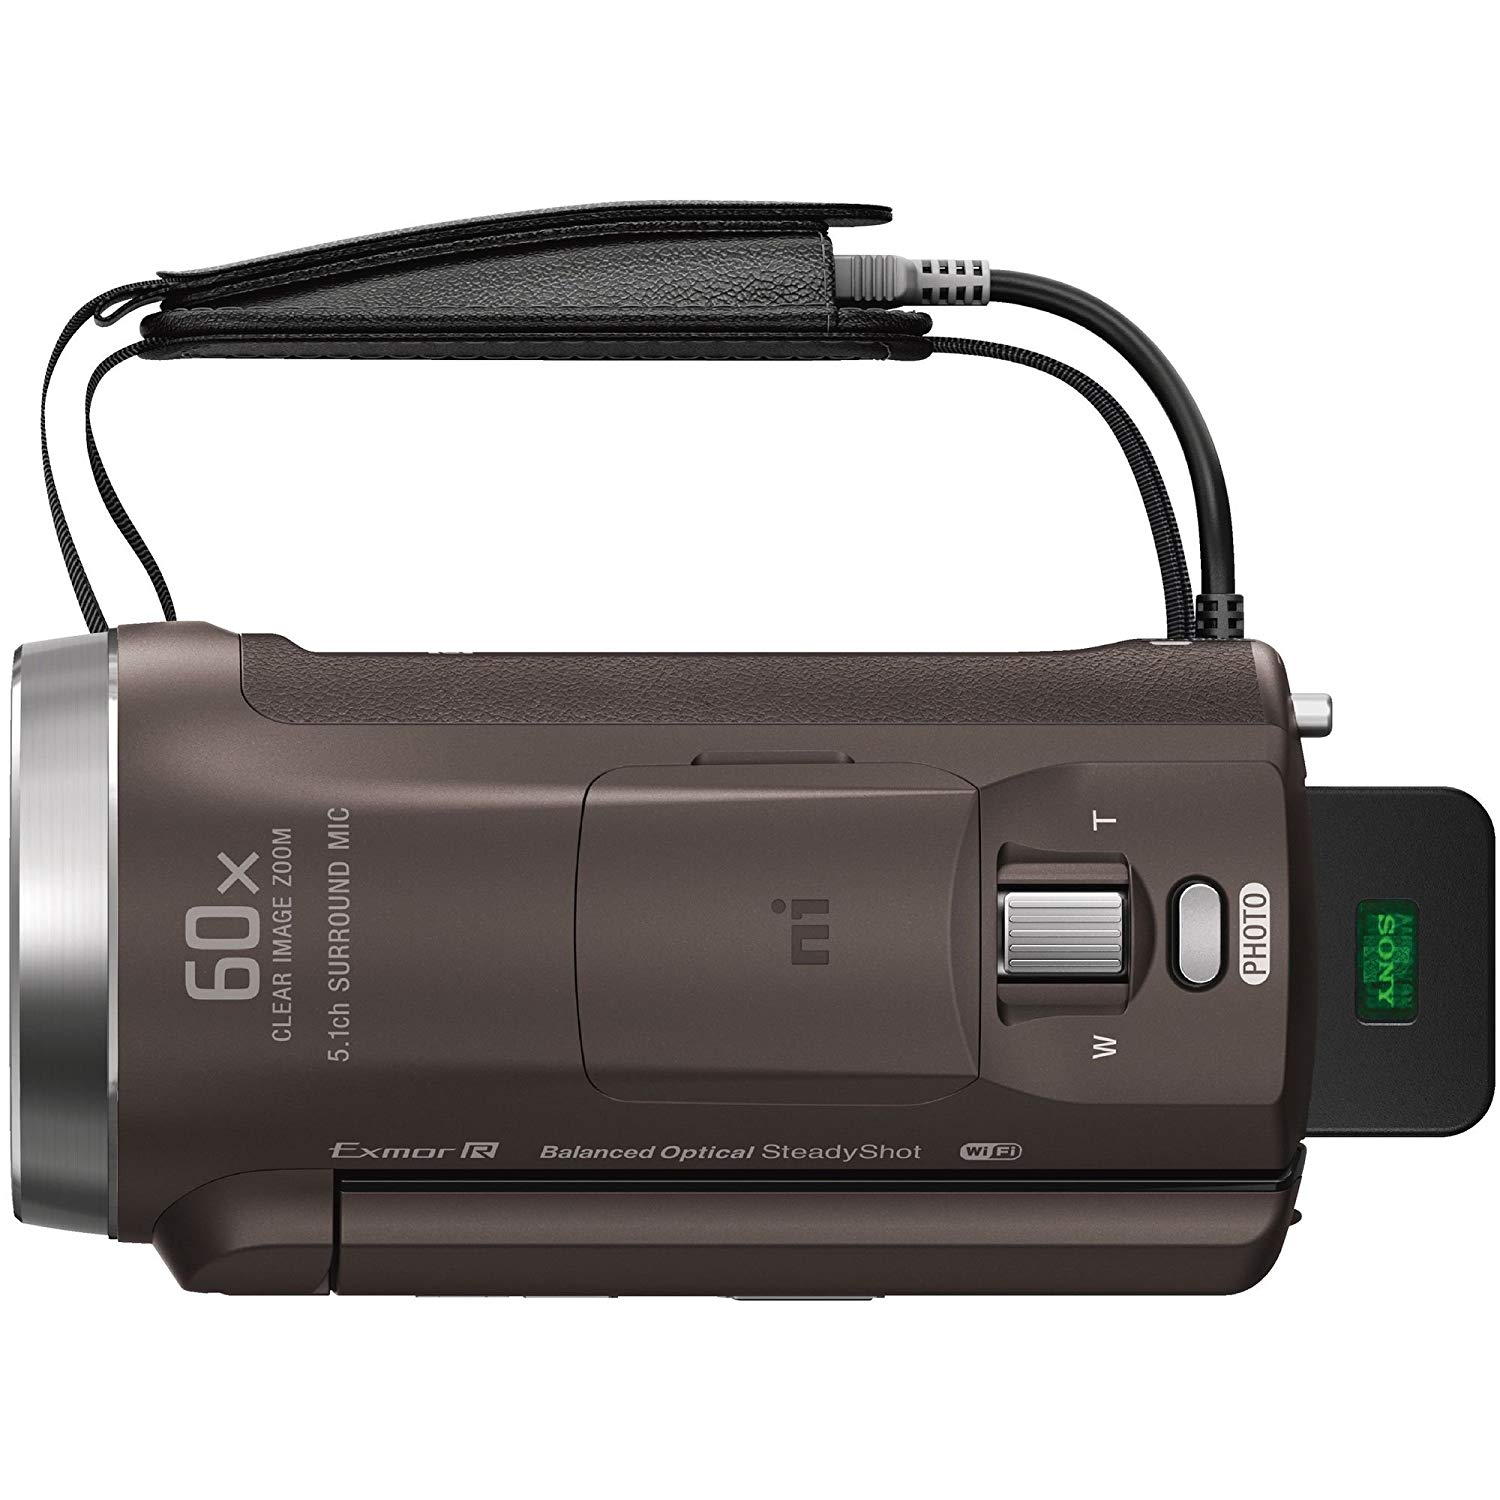 SONY ビデオカメラ HDR-PJ680 ブラウン | カメラのレンタルなら